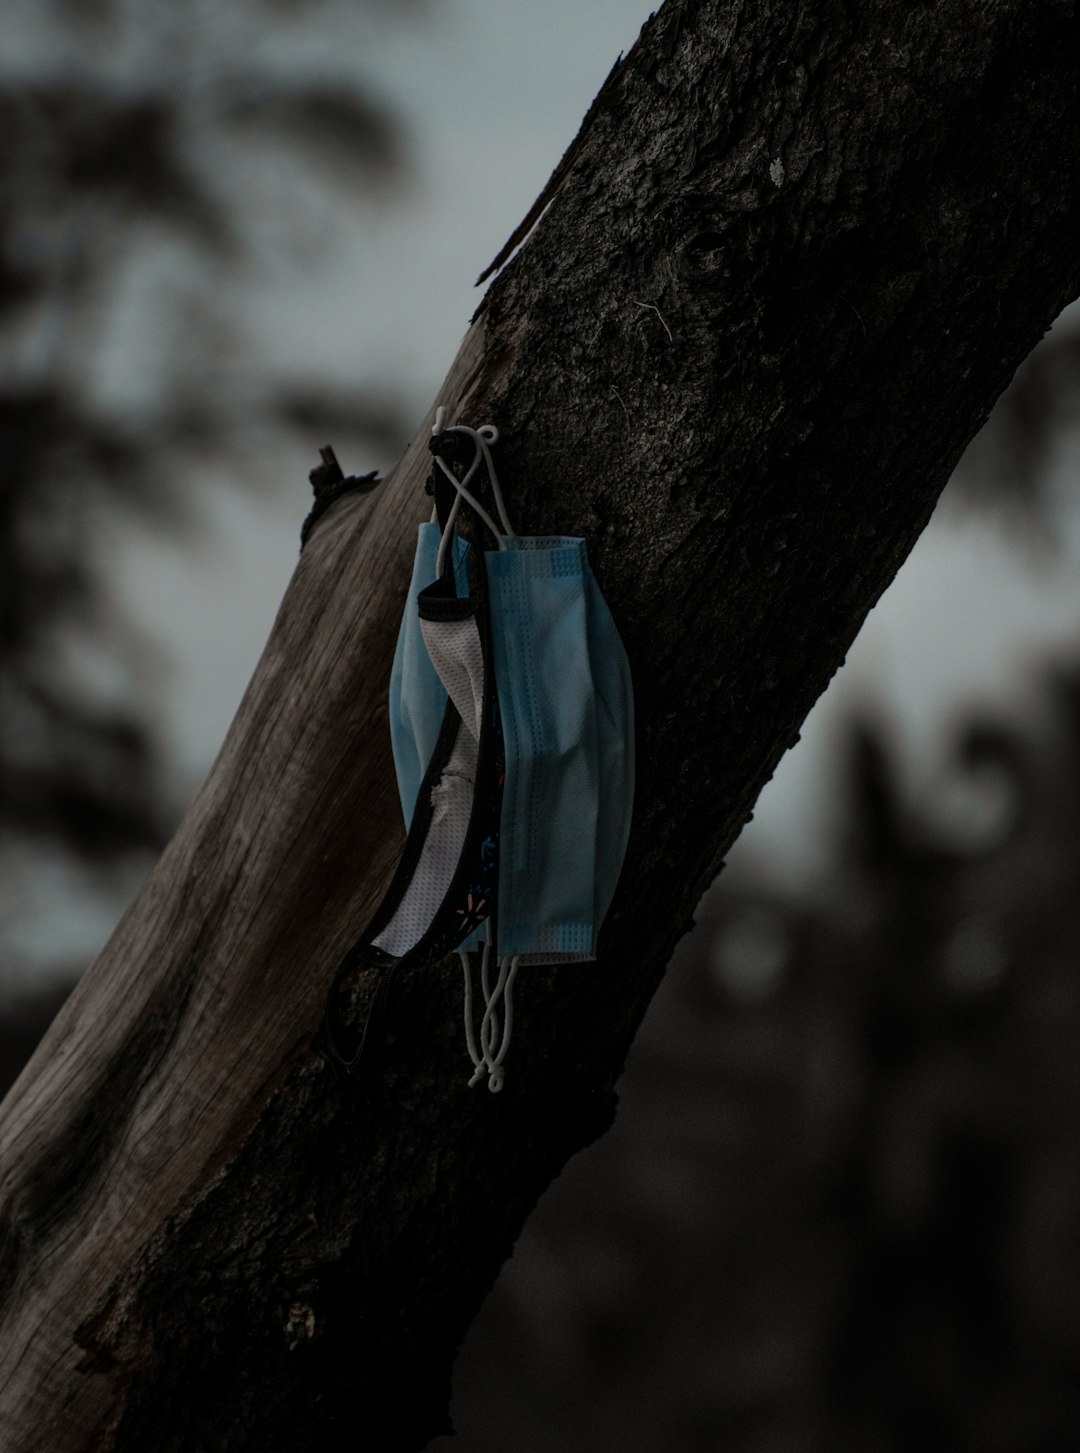 blue and white drawstring bag hanging on brown tree branch